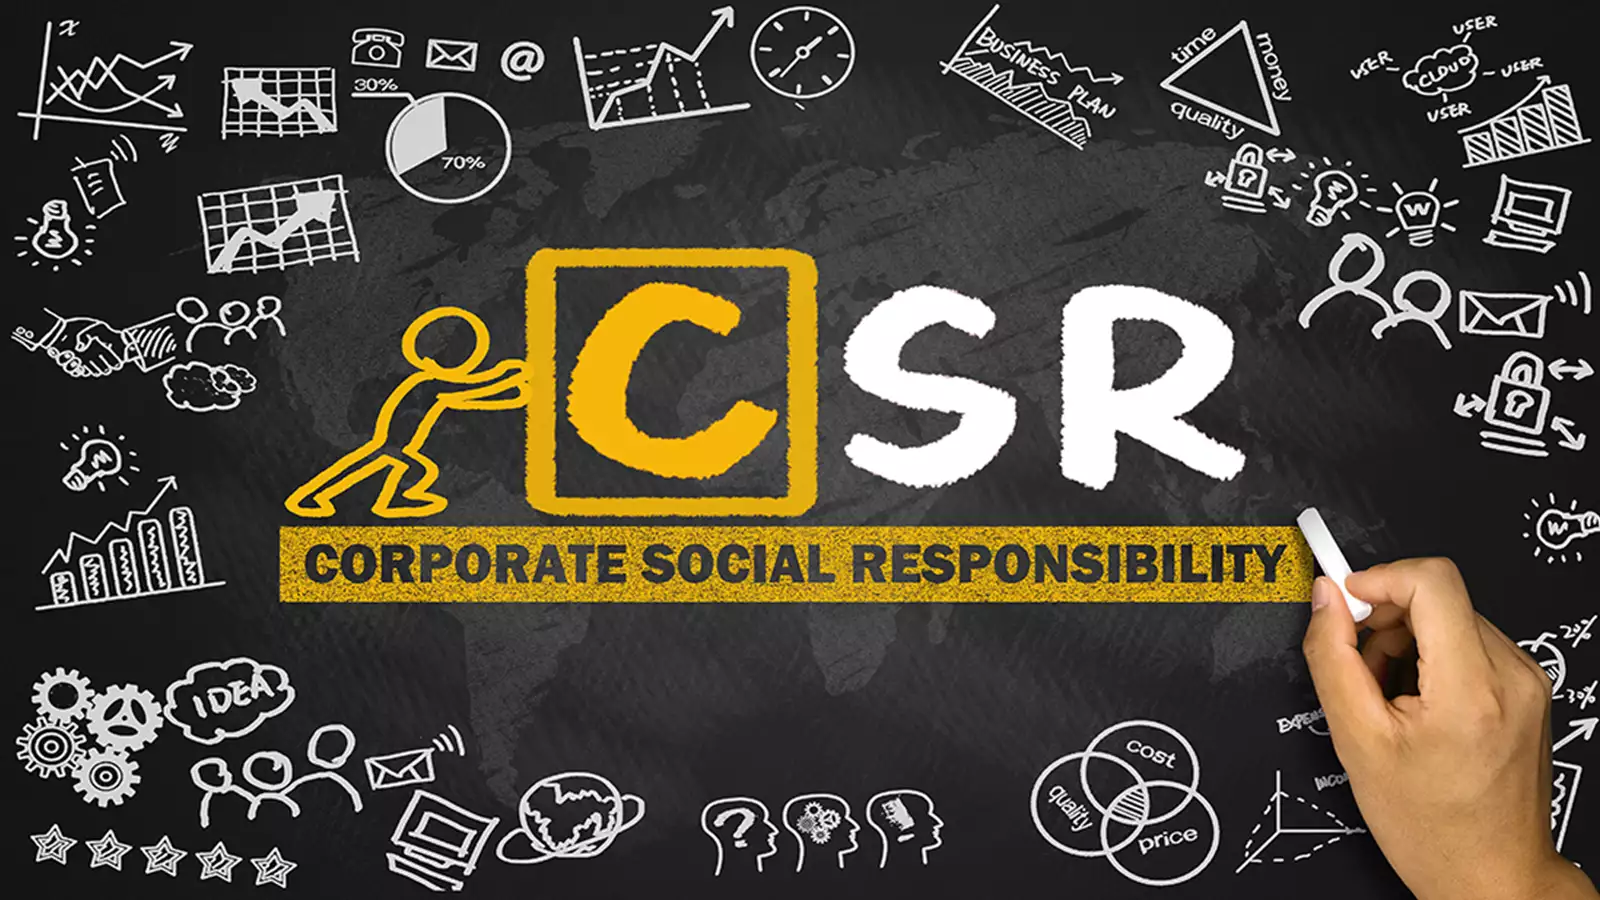 cadbury corporate social responsibility